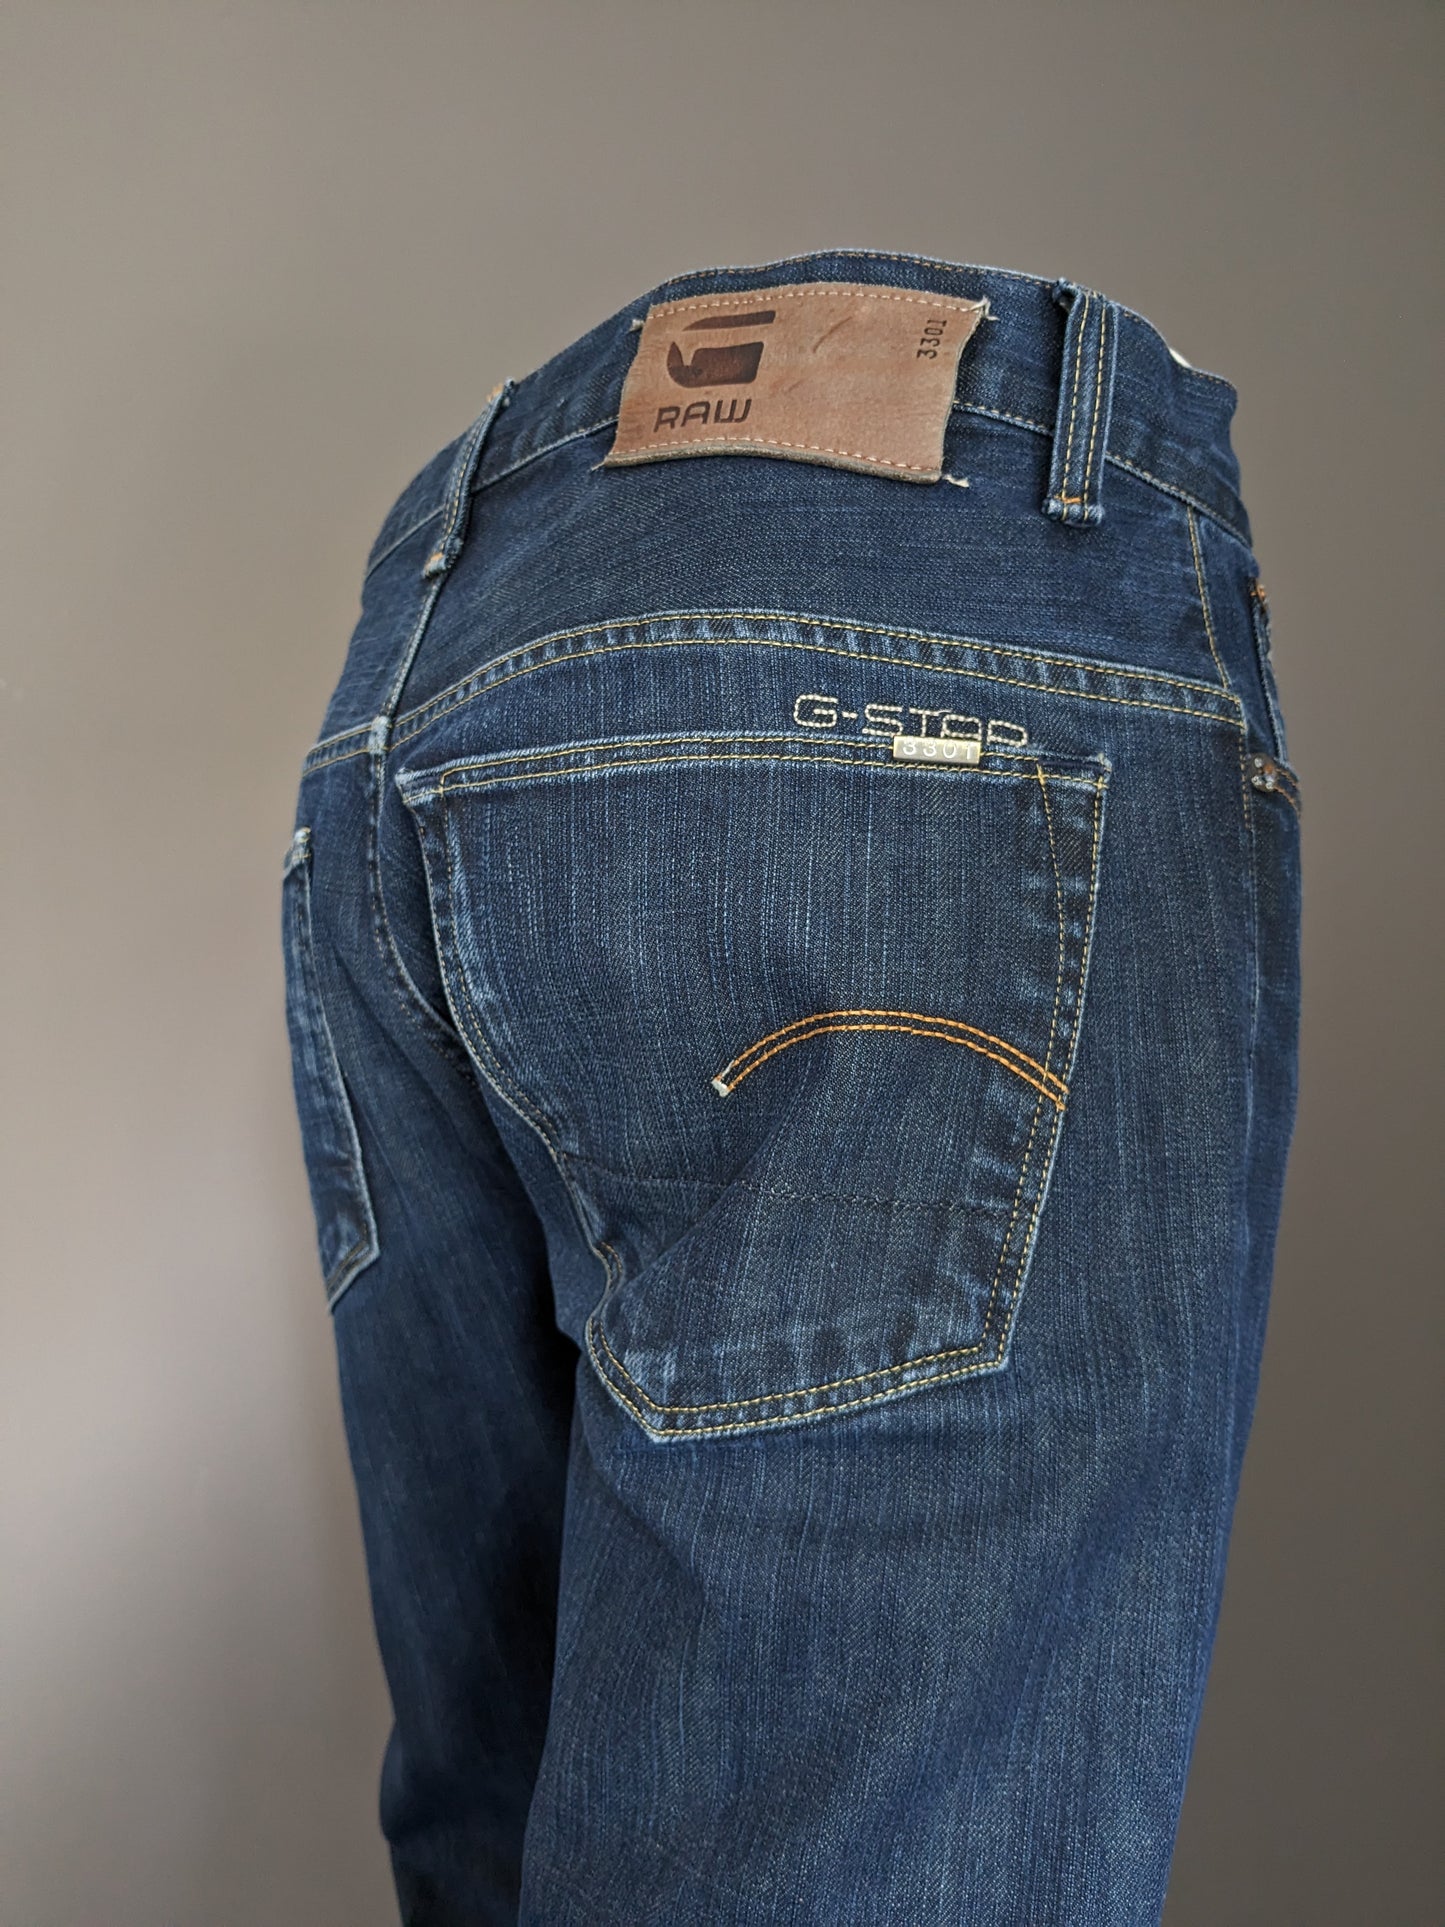 G-Star Raw Jeans. Dark blue colored. Size W31 - L32.